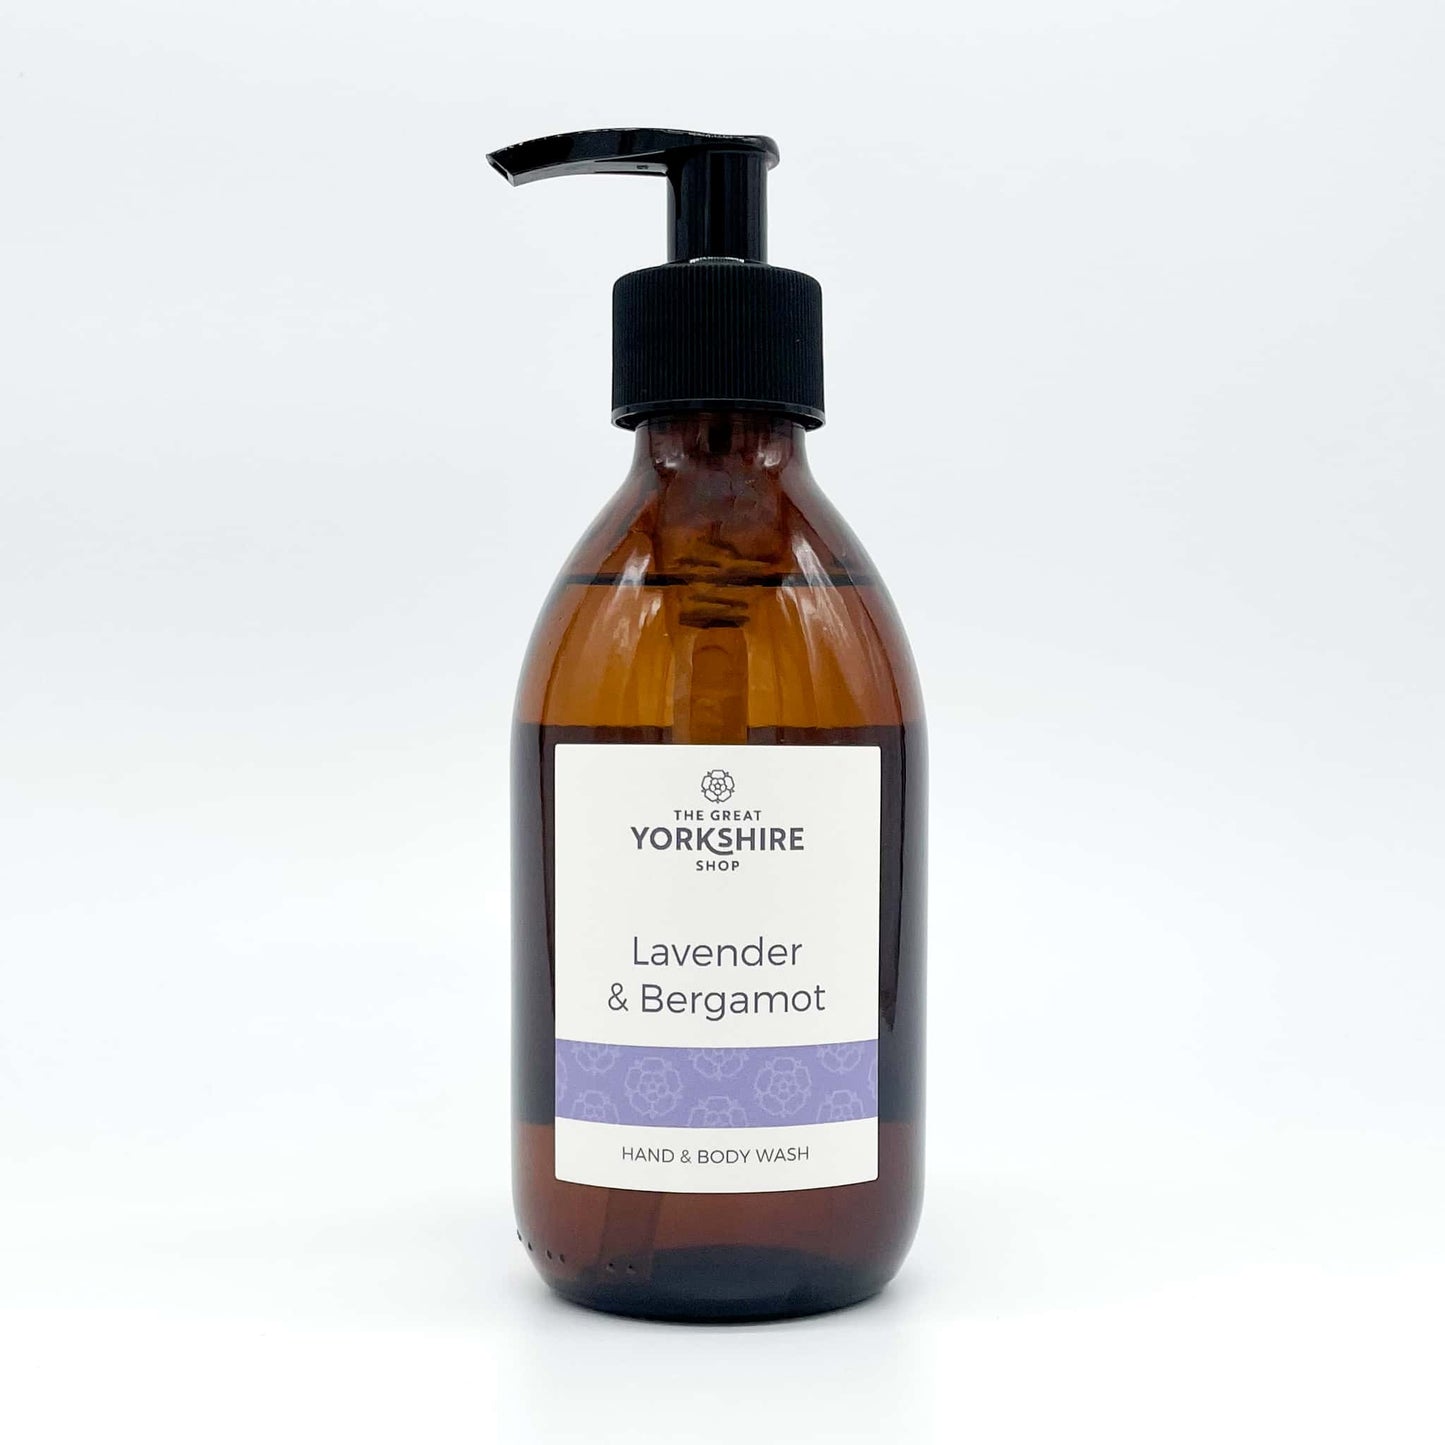 Lavender & Bergamot Hand & Body Wash - The Great Yorkshire Shop